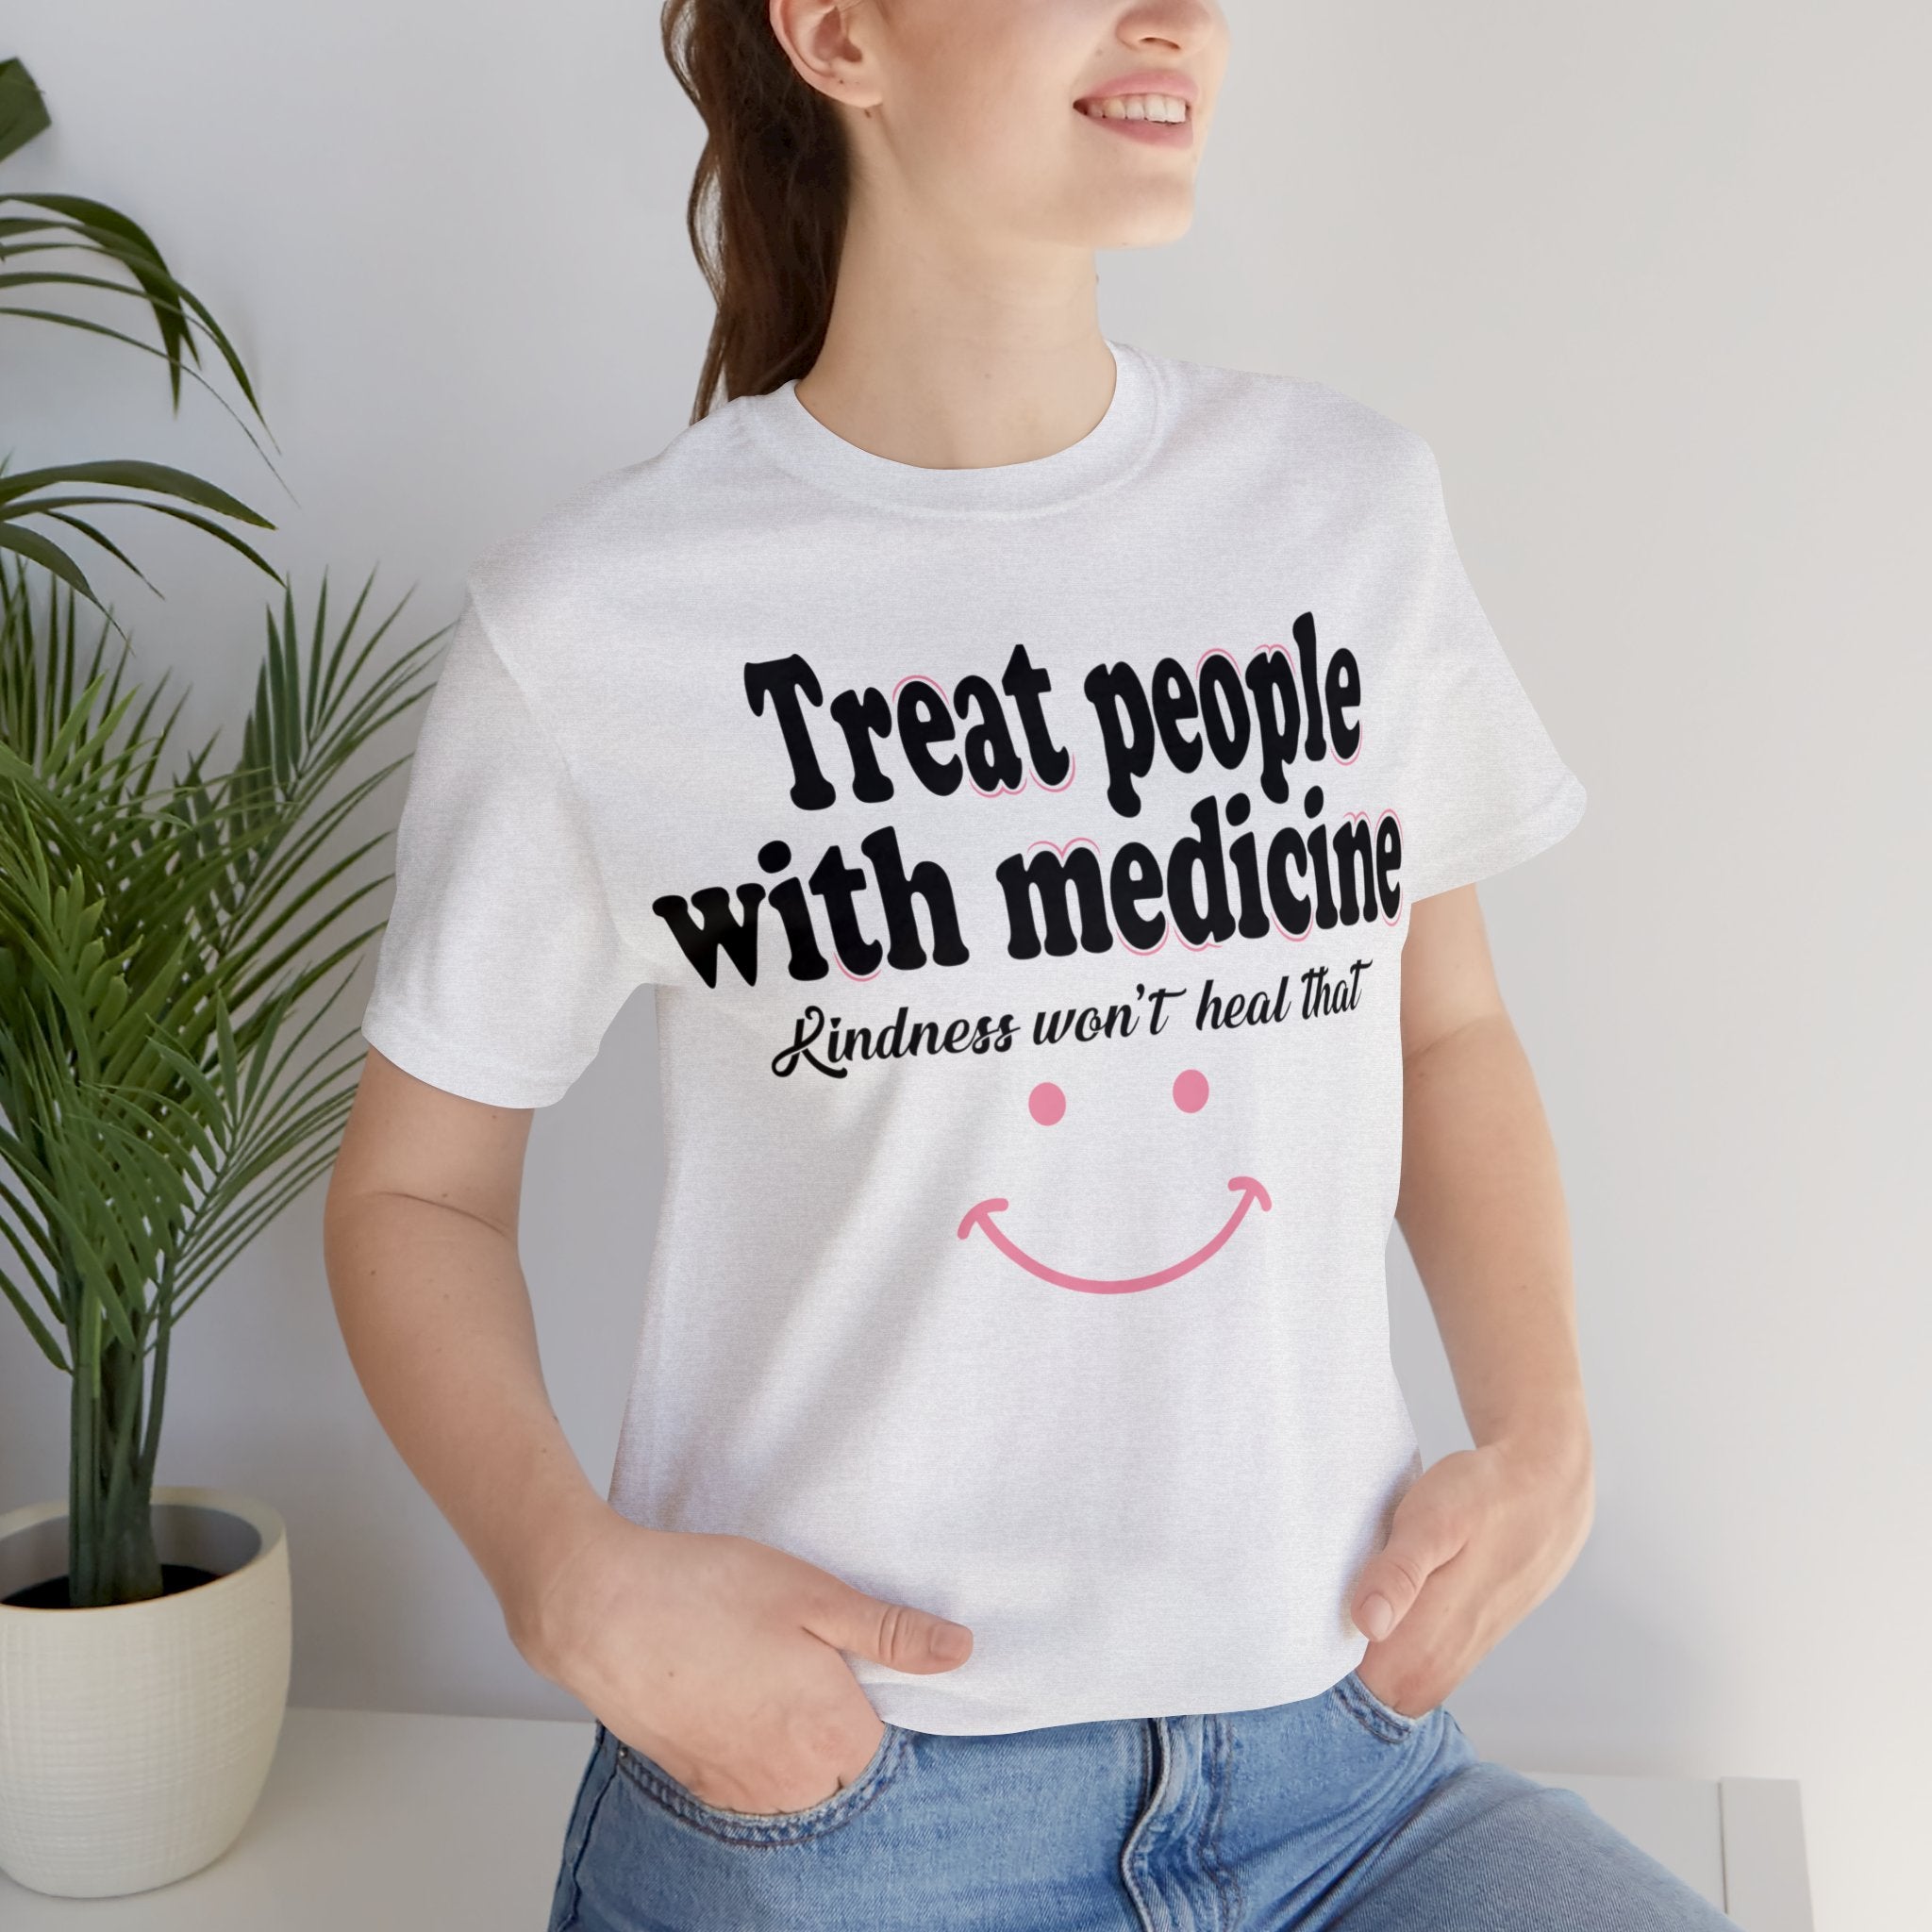 Treat People With Medicine - Kindness